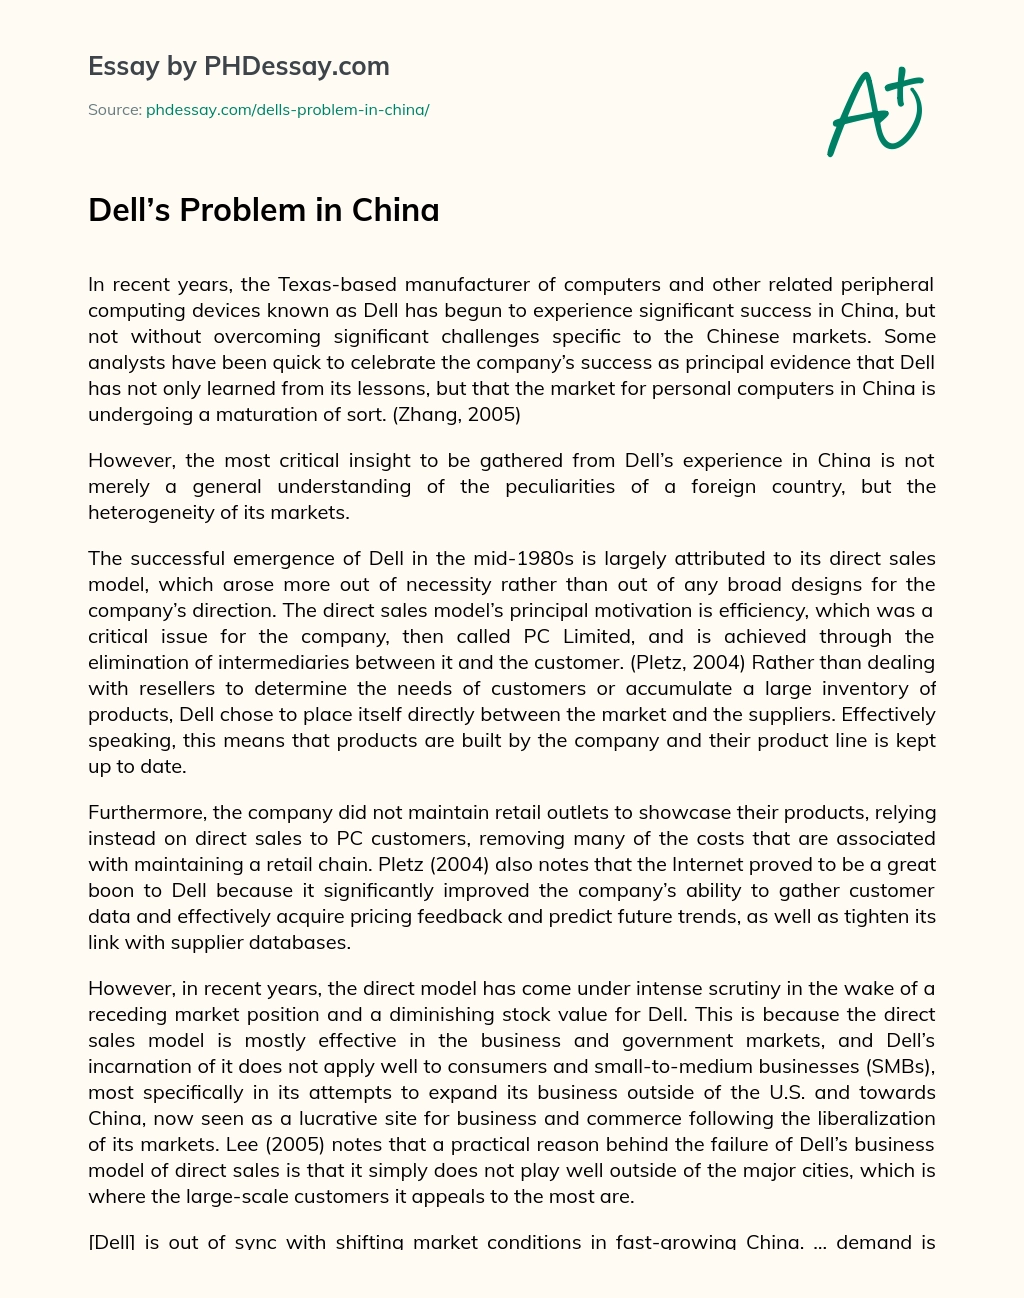 Dell’s Problem in China essay